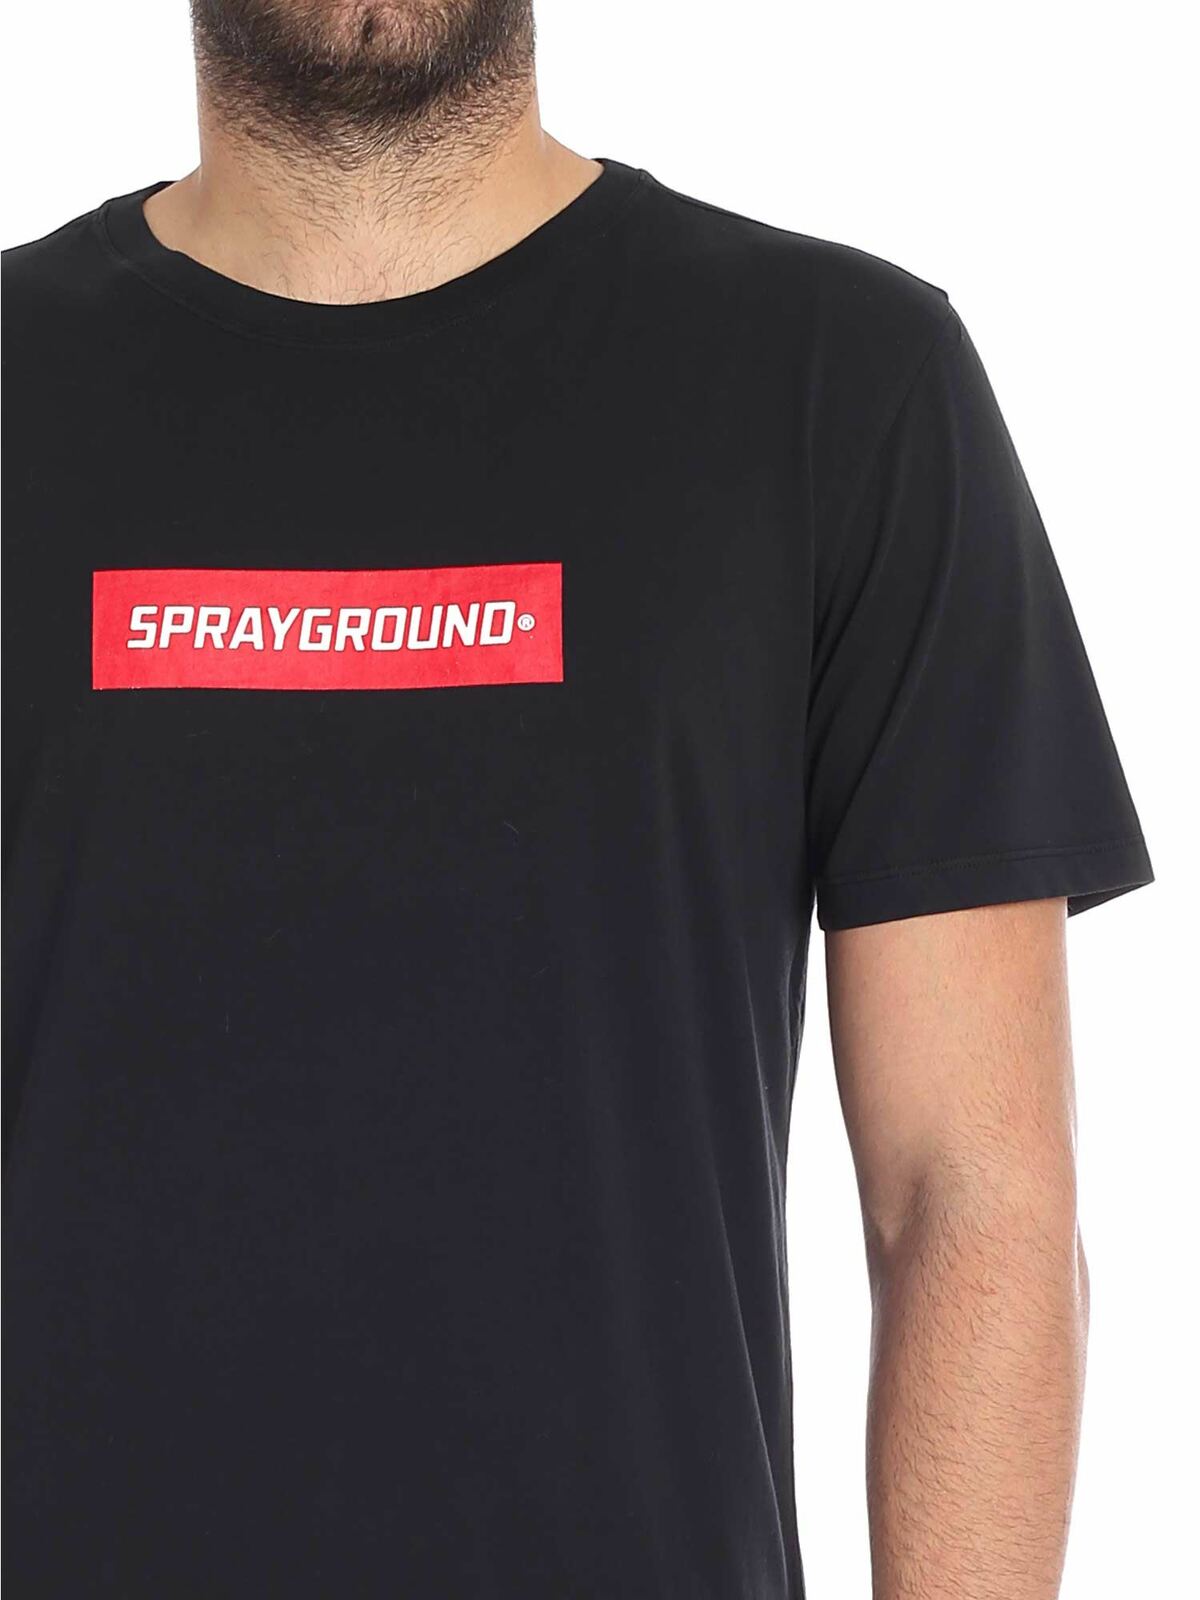 graphic-print short-sleeved T-shirt, Sprayground